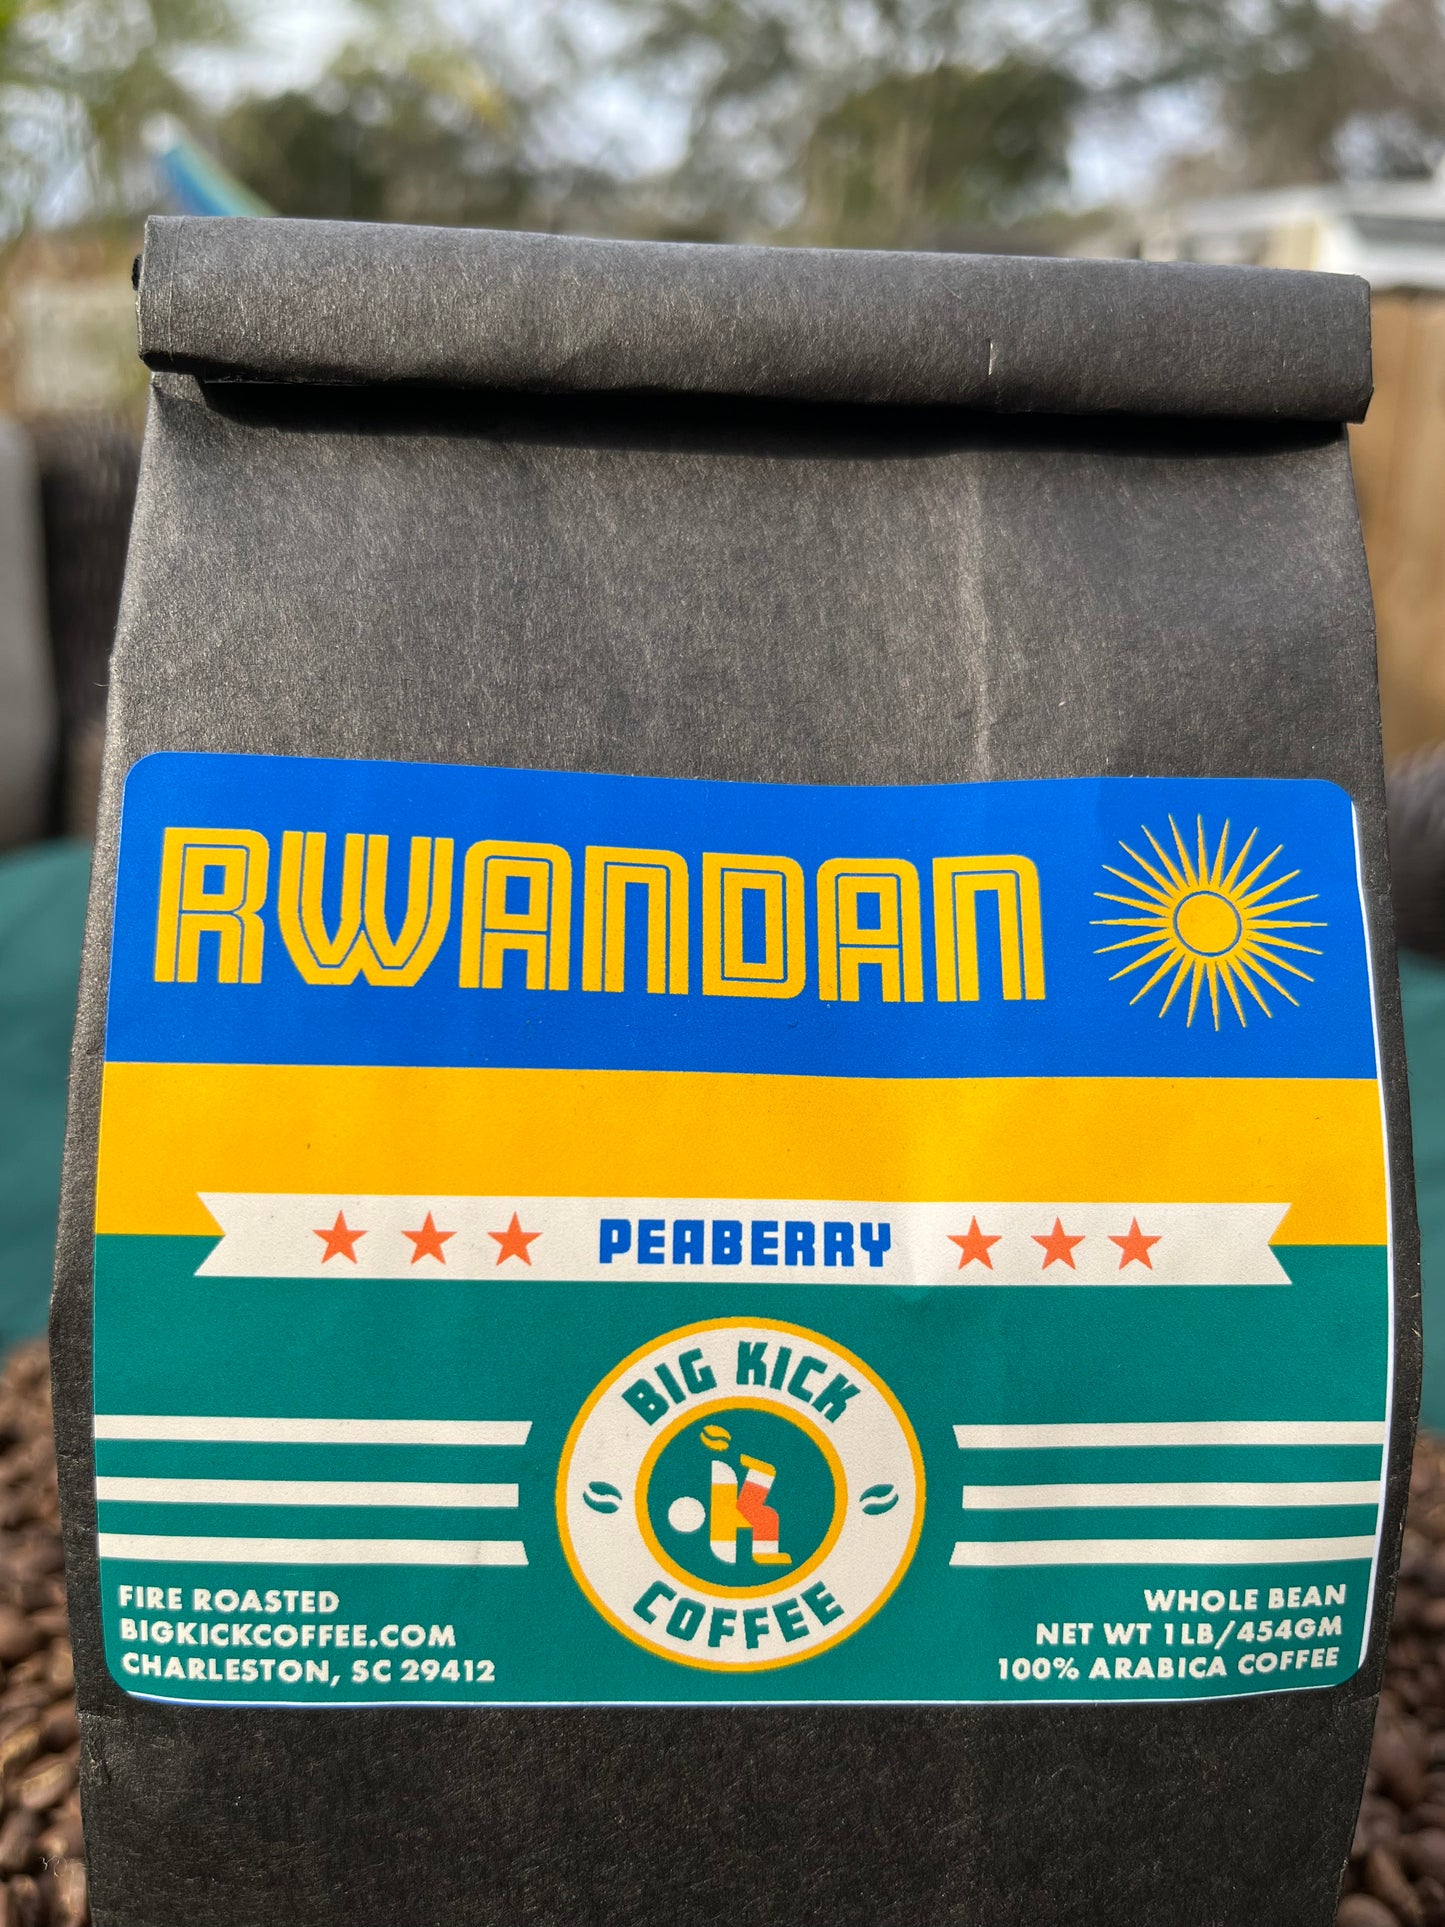 Rwandan Peaberry